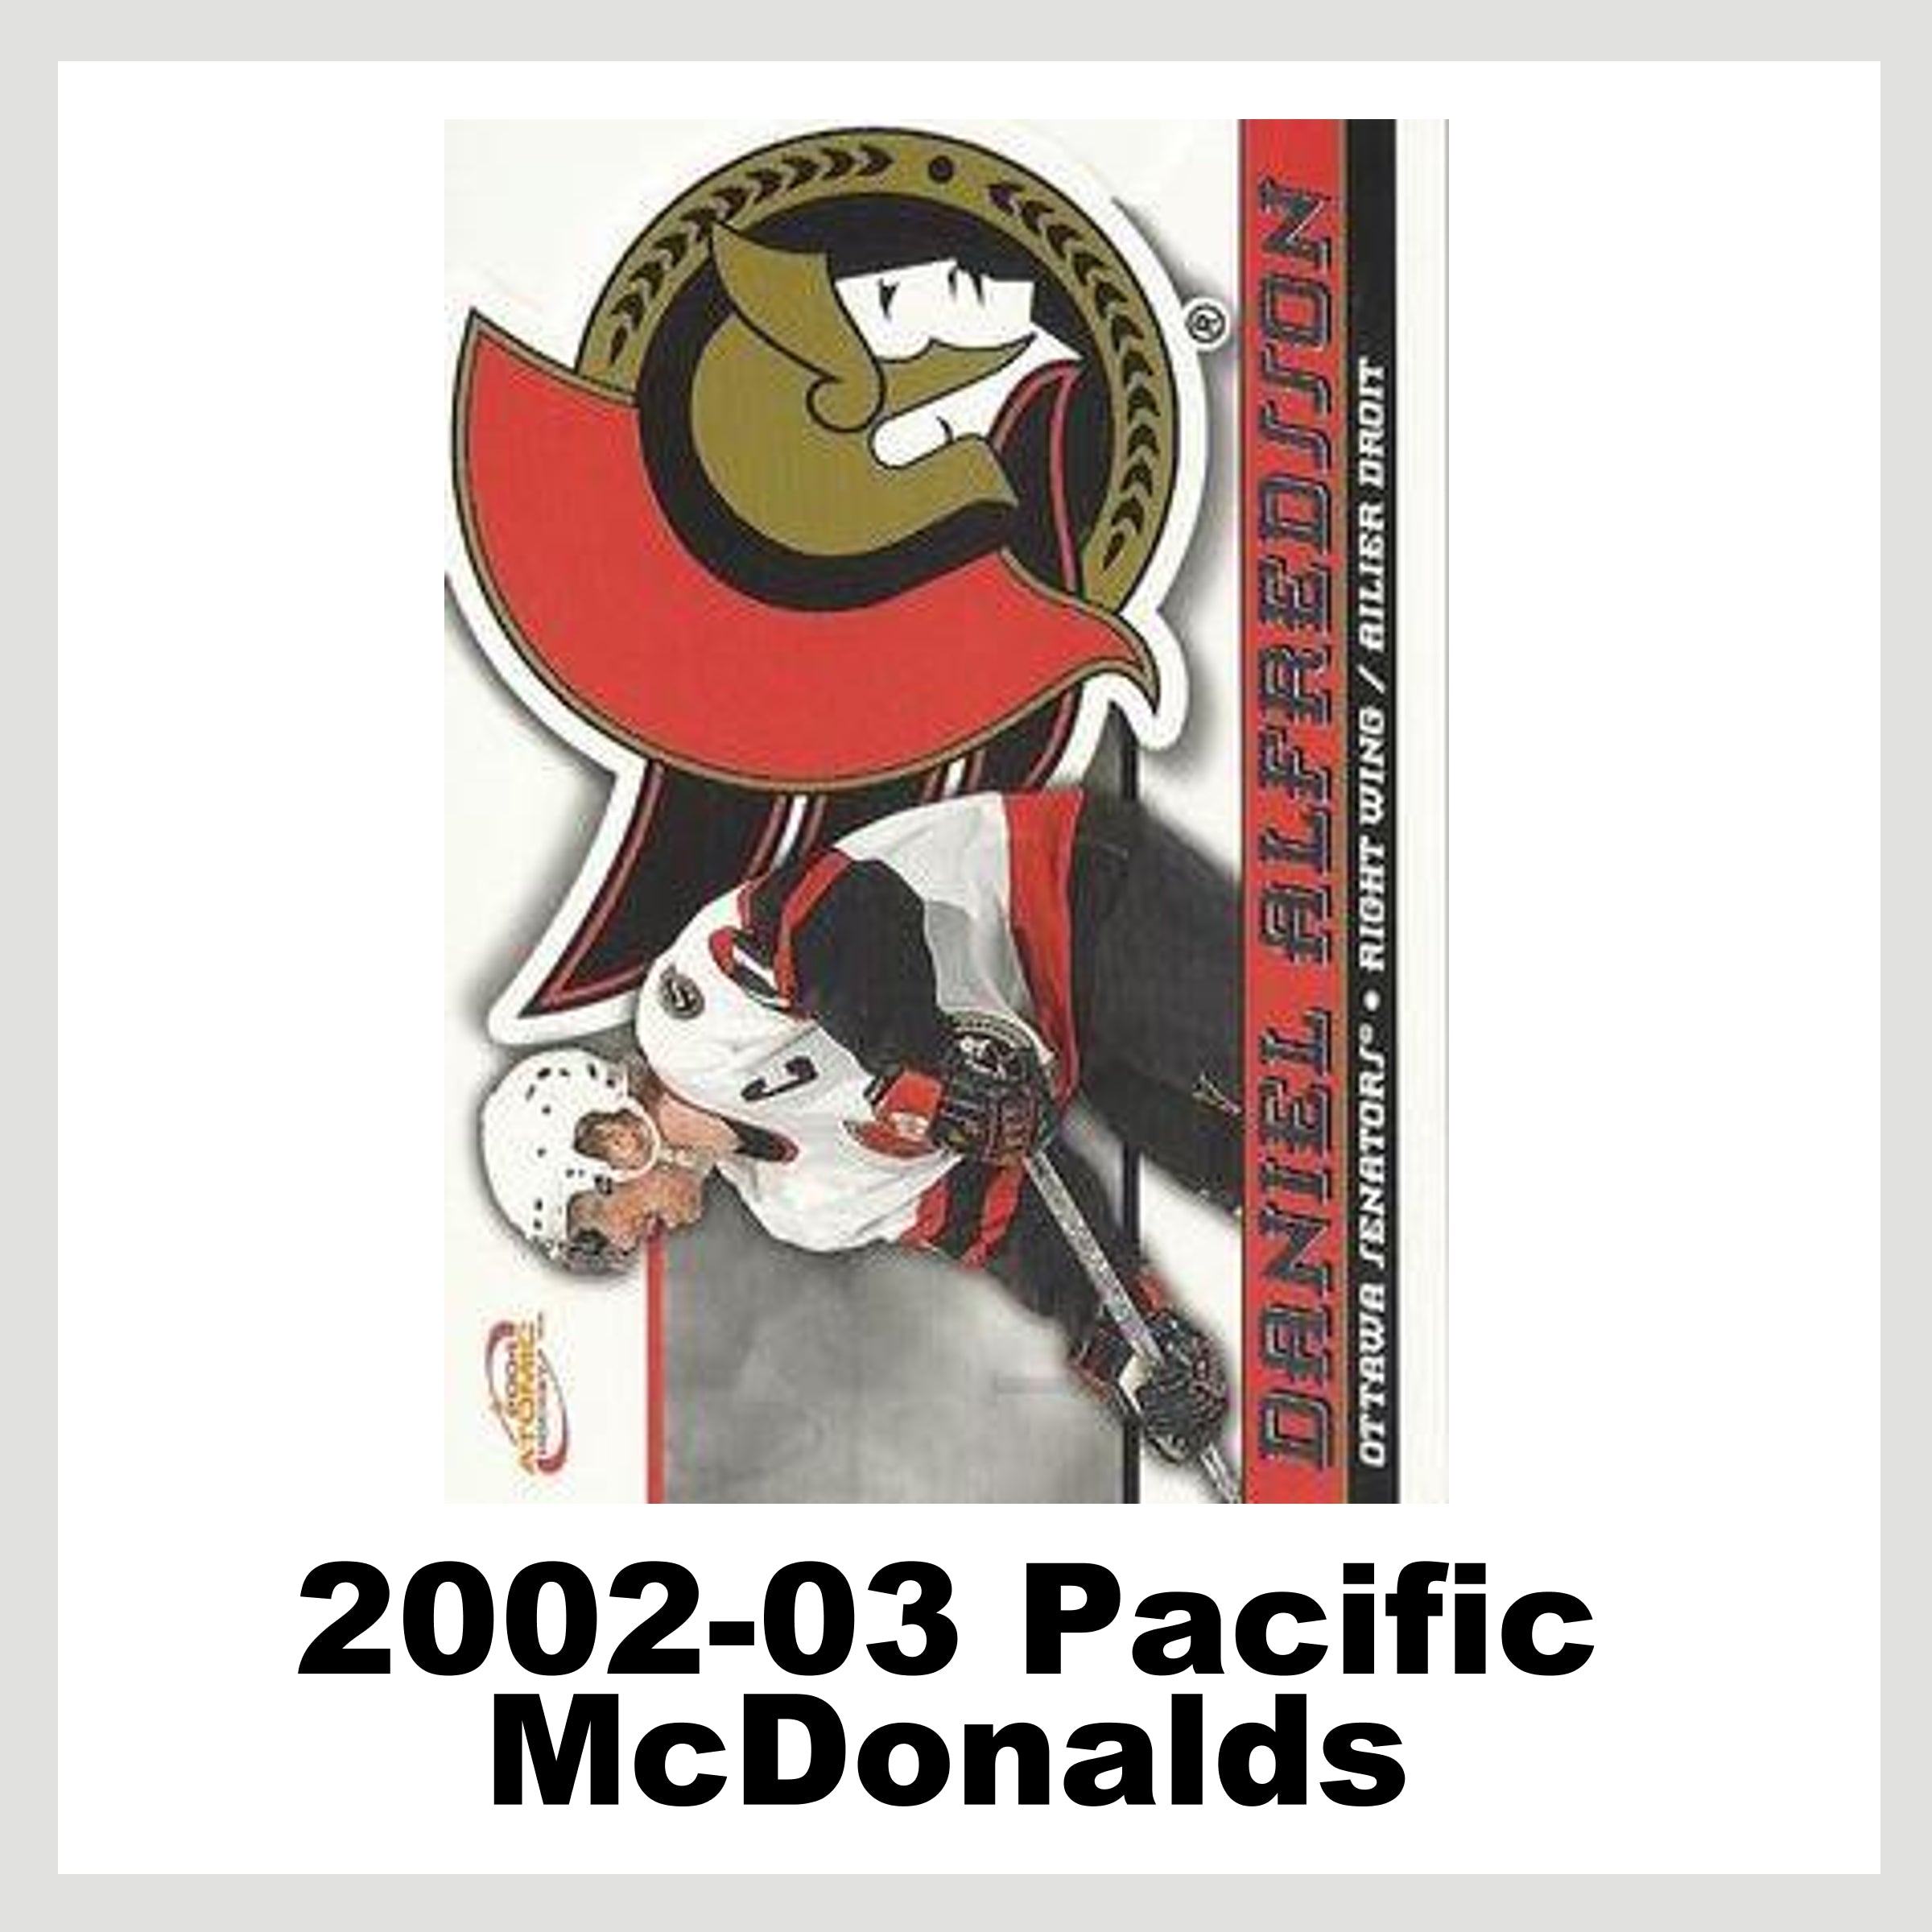 29 Marian Hossa - Ottawa Senators - 2002-03 Pacific McDonald's